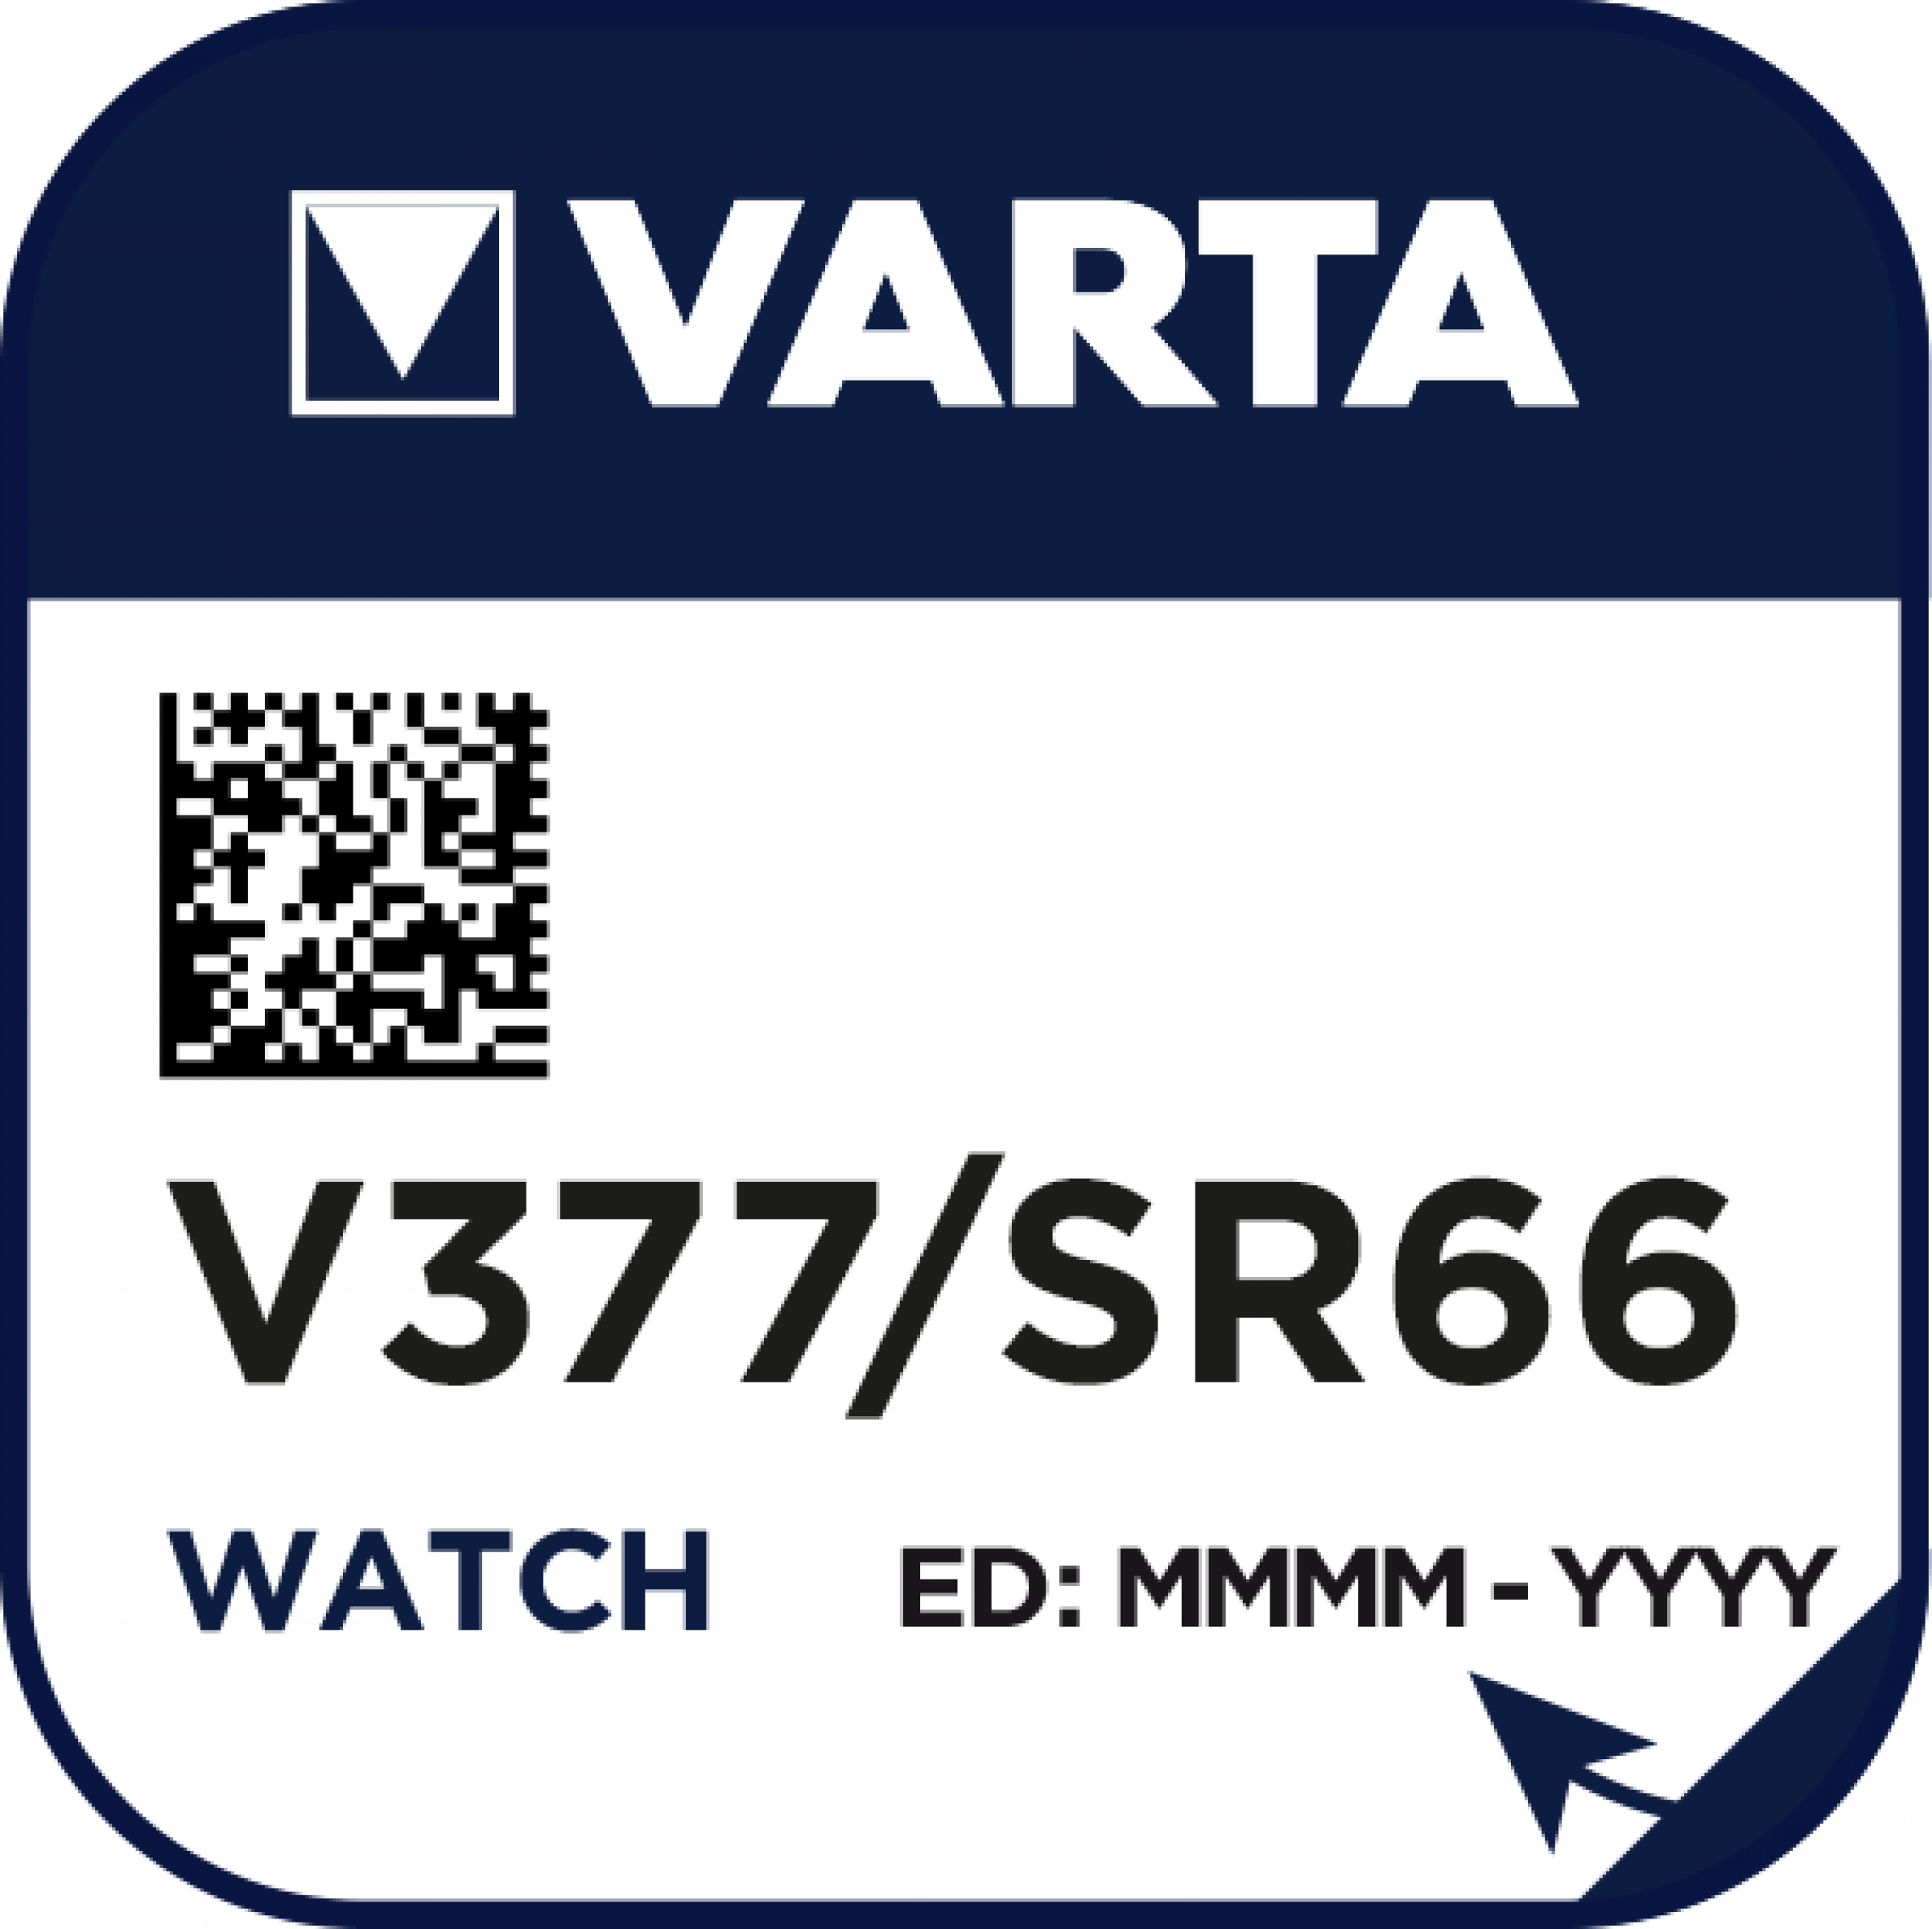 VARTA V377 Silberoxid Uhrenbatterie 1er Miniblister